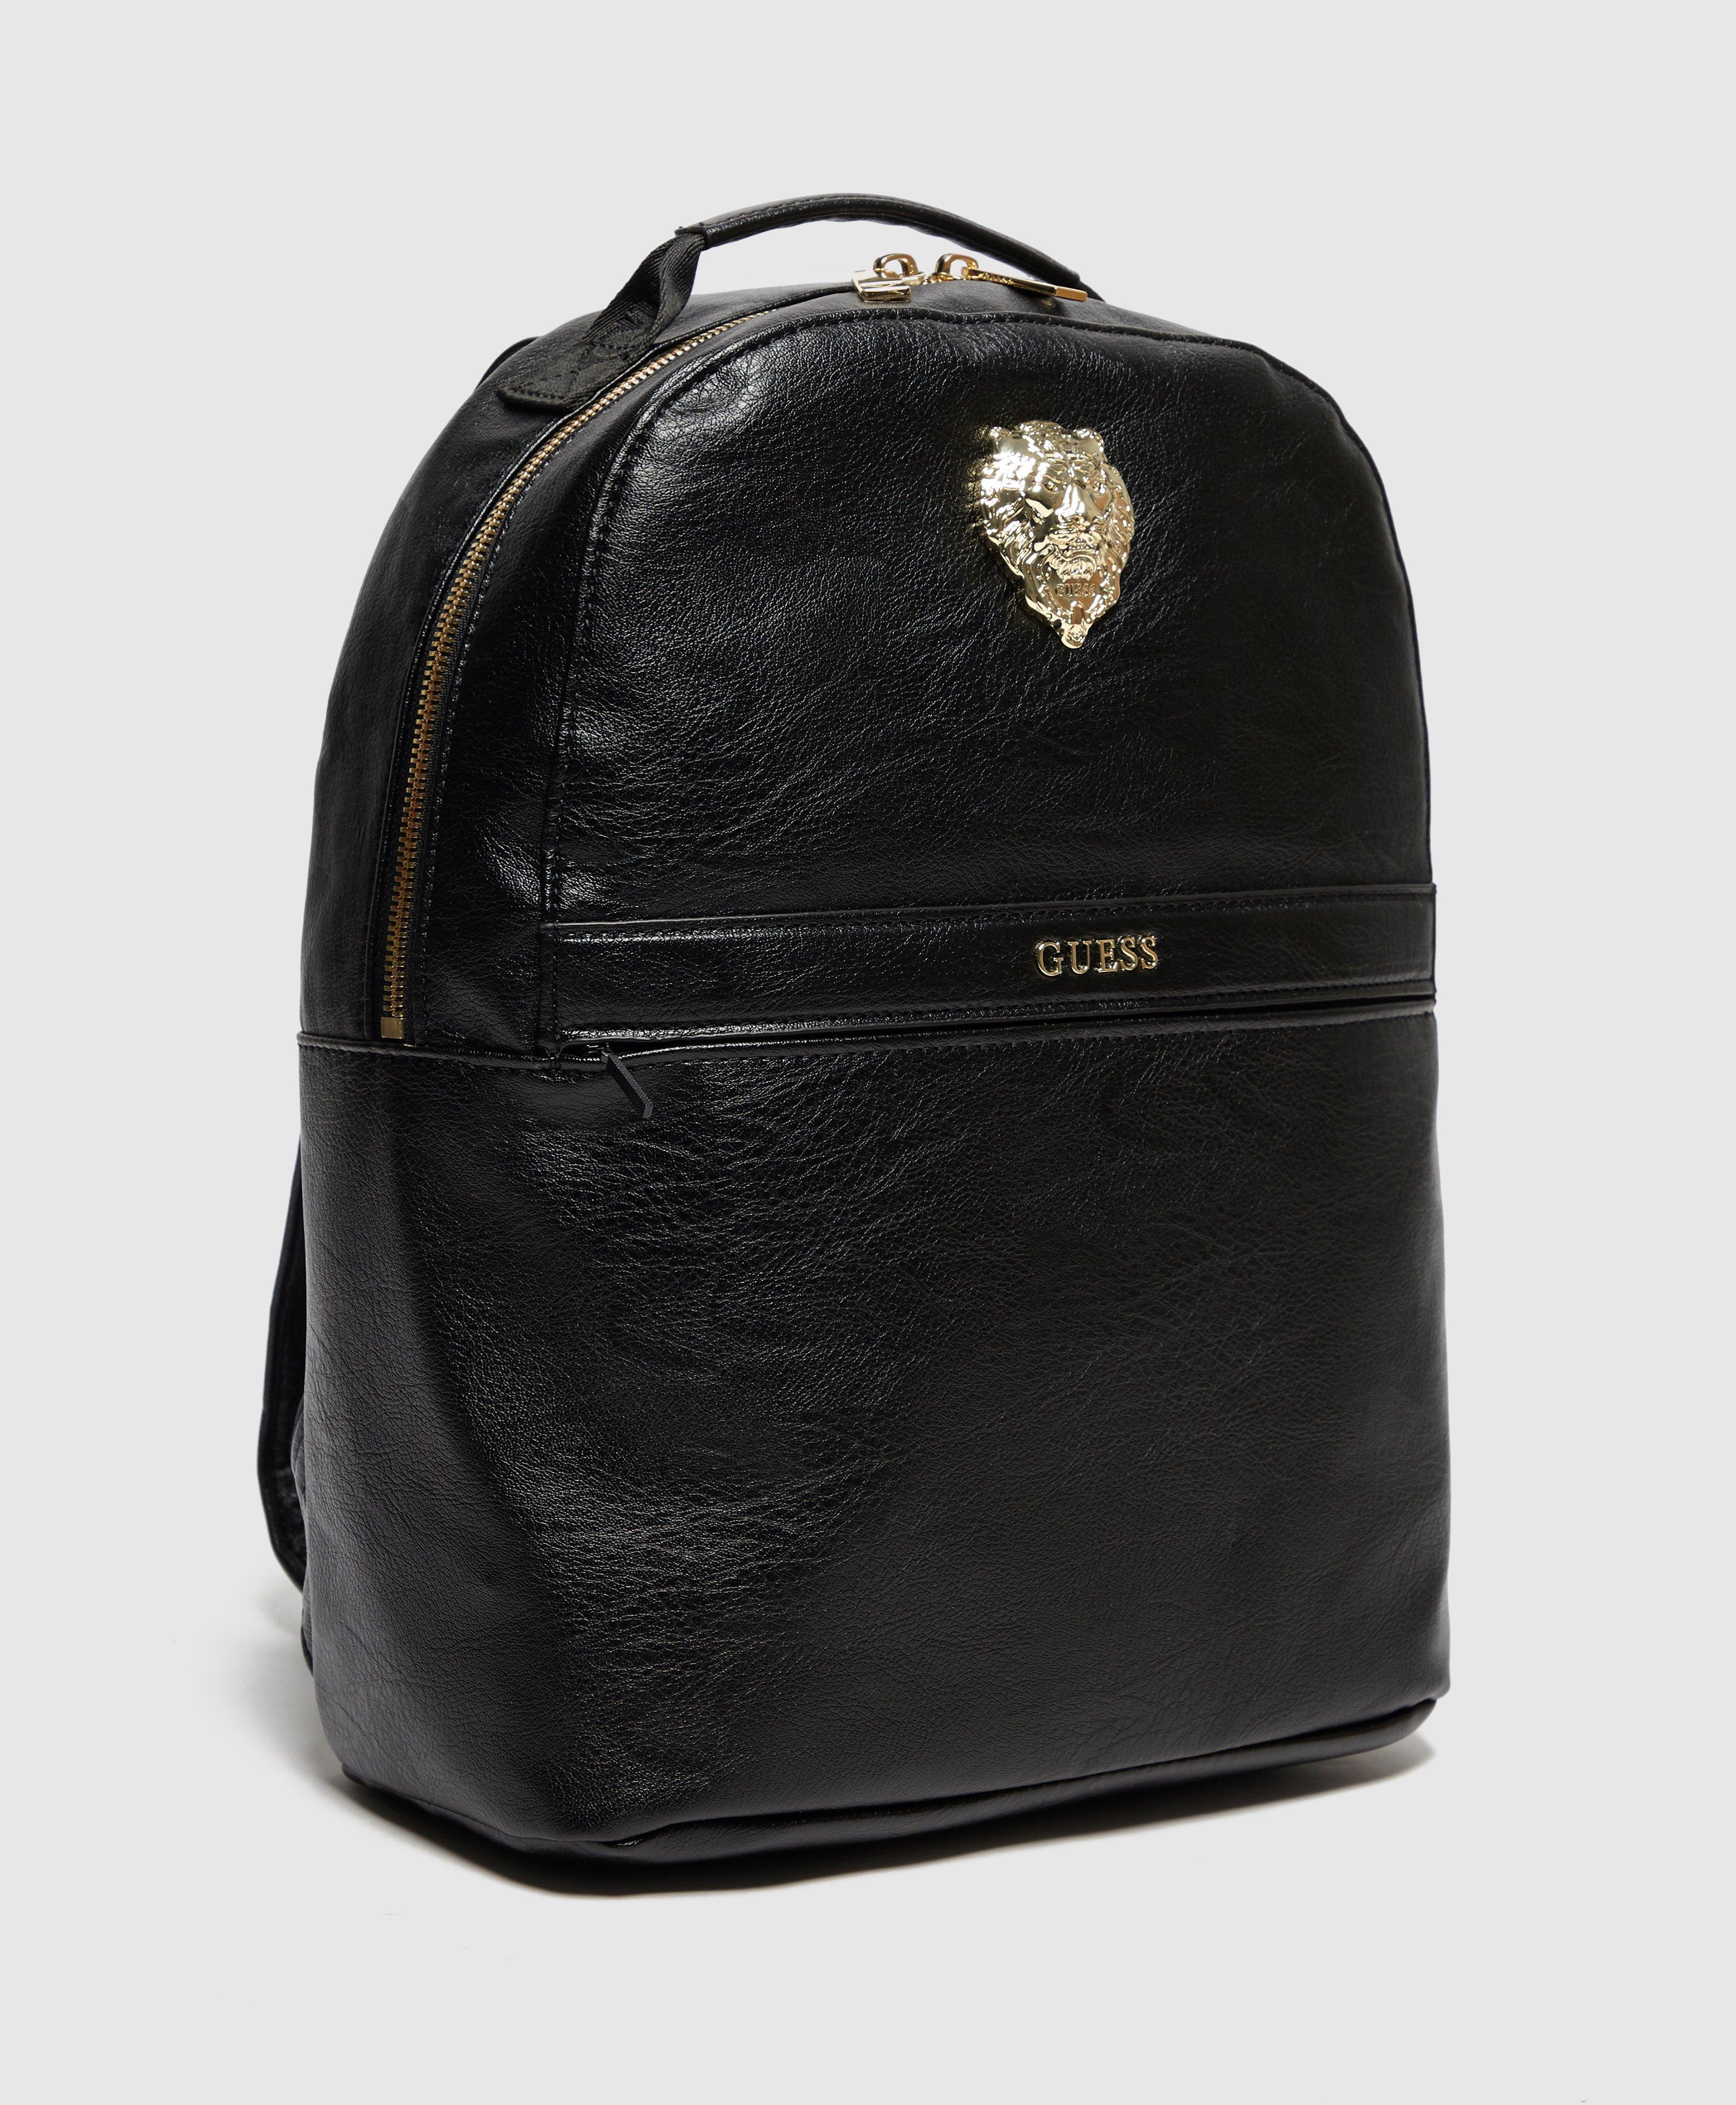 Guess Lion Backpack in Black for Men - Lyst